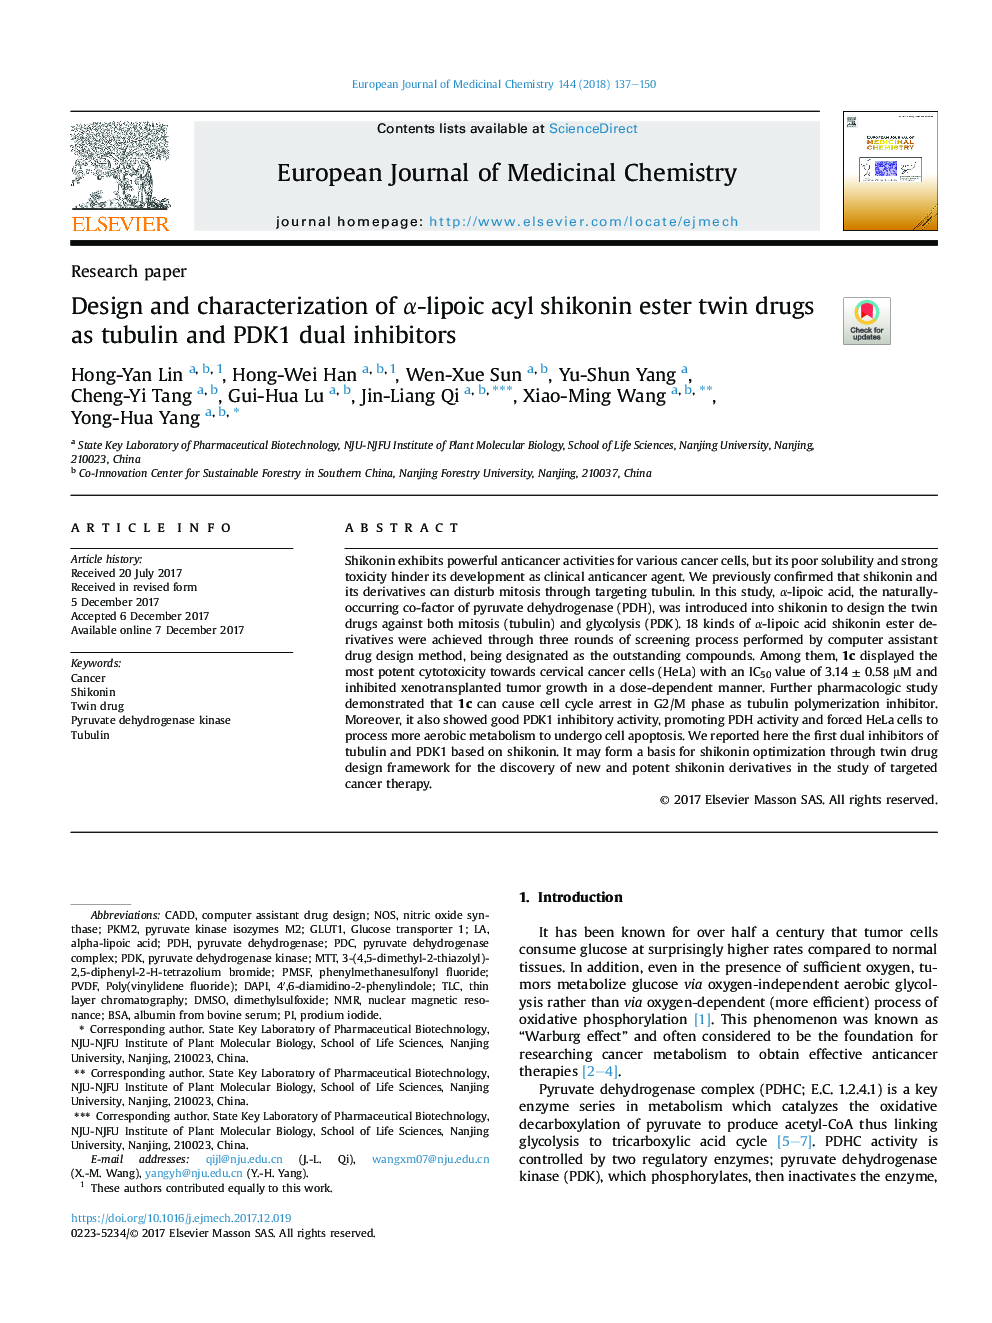 Design and characterization of Î±-lipoic acyl shikonin ester twin drugs as tubulin and PDK1 dual inhibitors